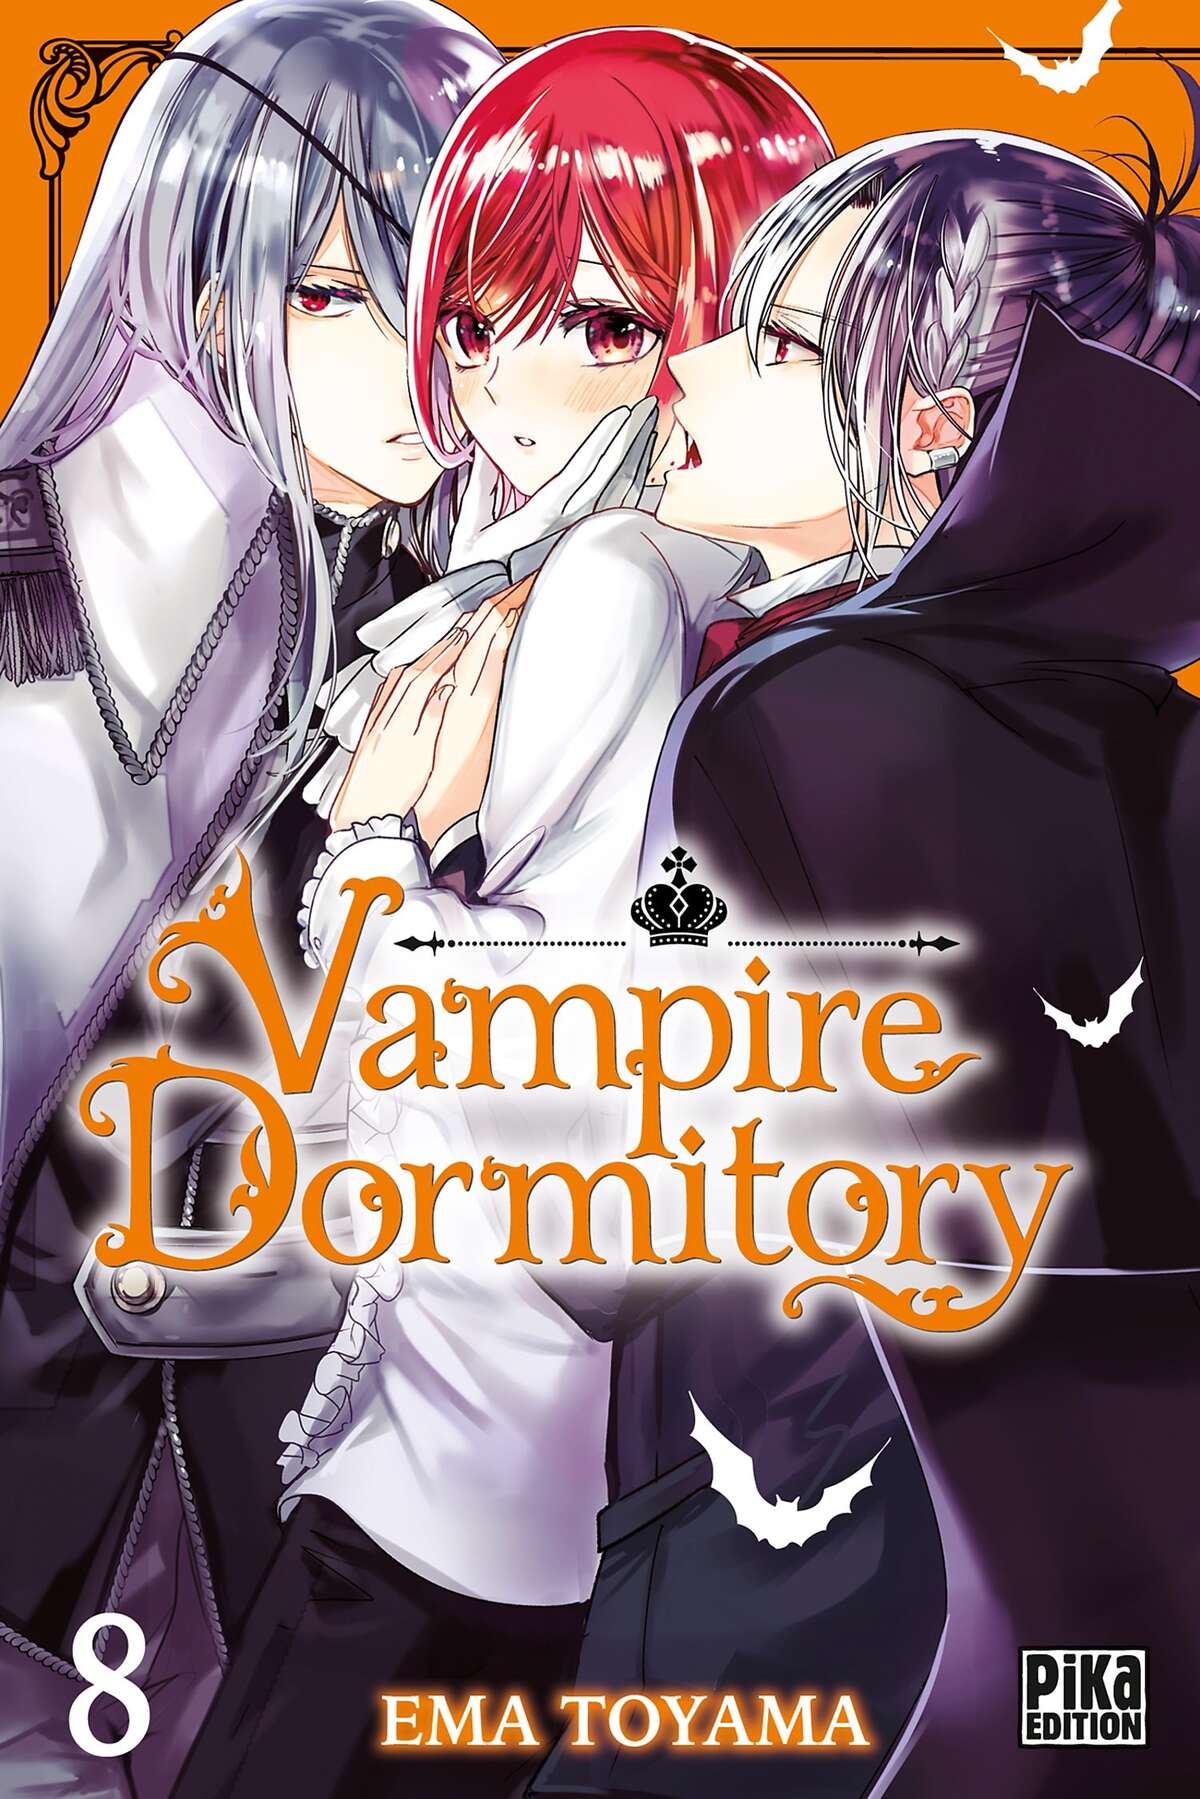 Vampire Dormitory Volume 8 page 1